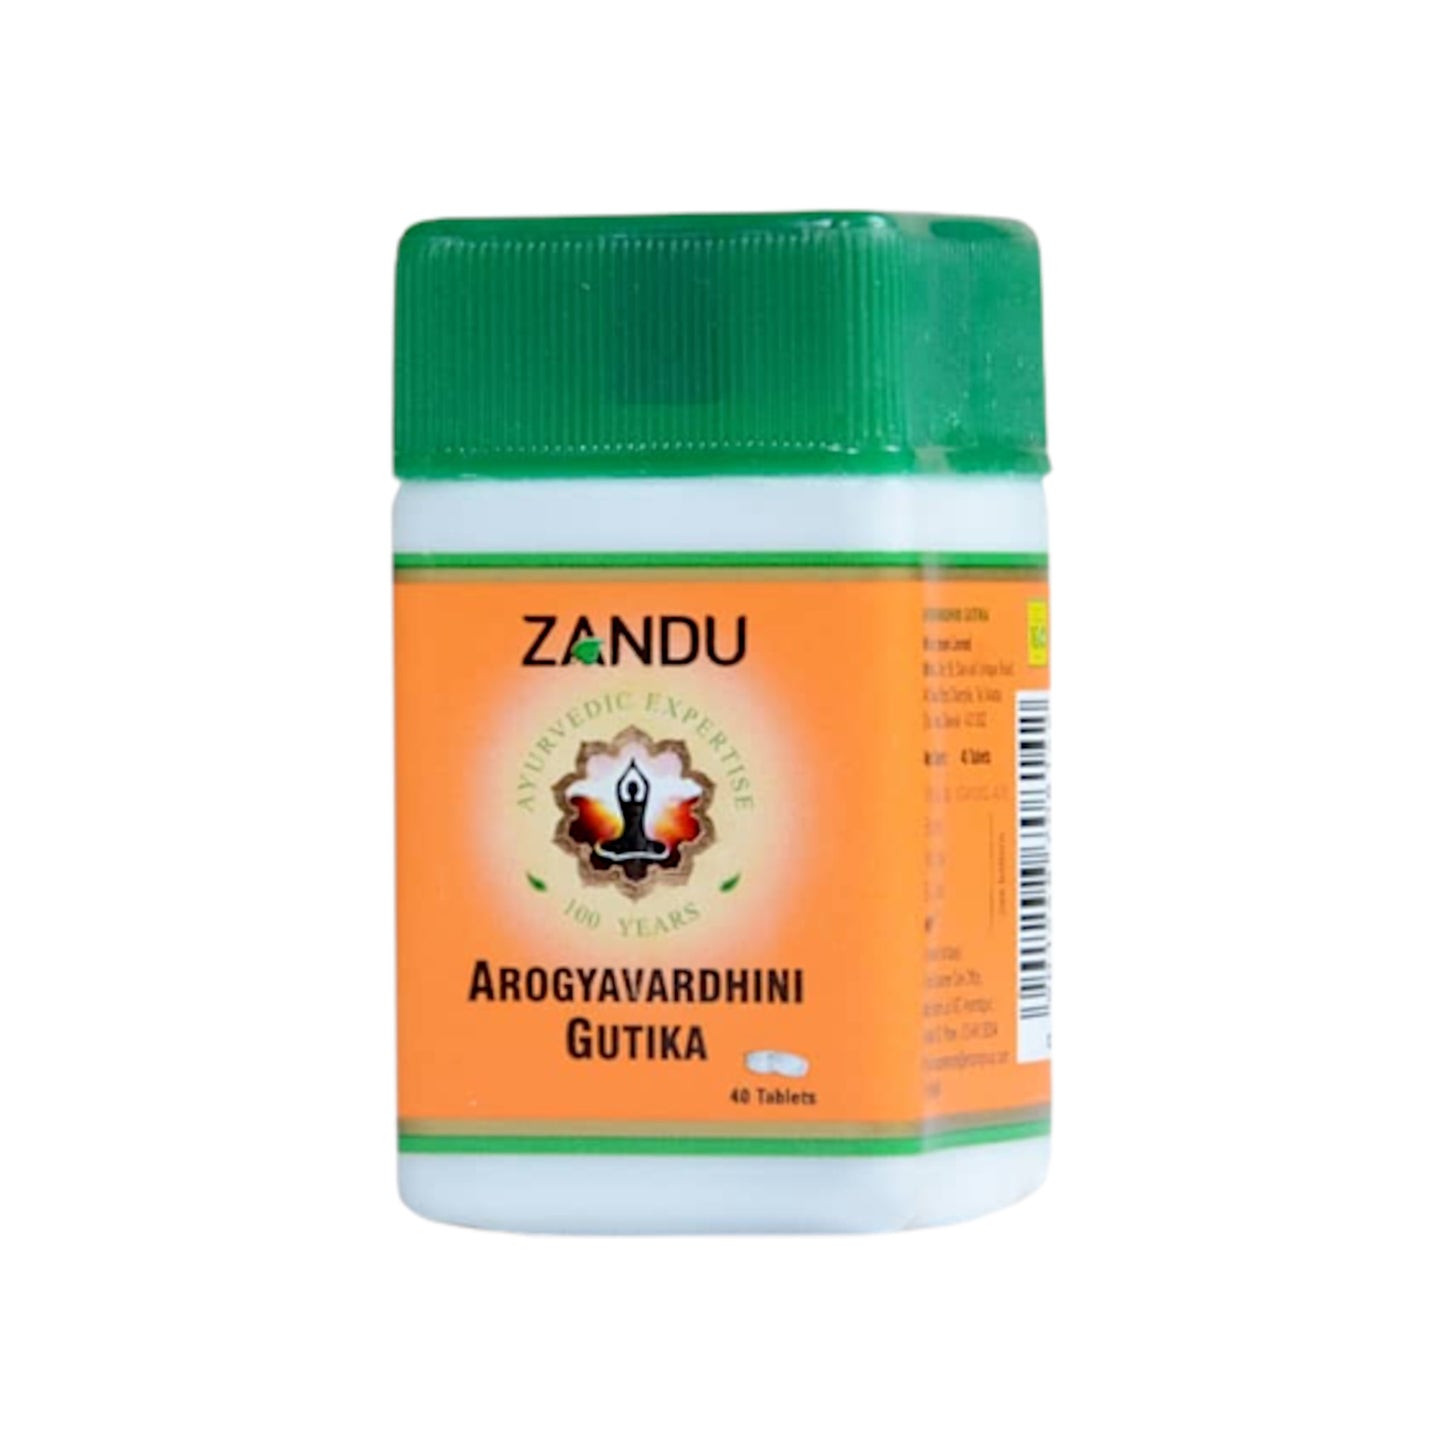 Zandu - Arogyavardhani Gutika 40 Tablets